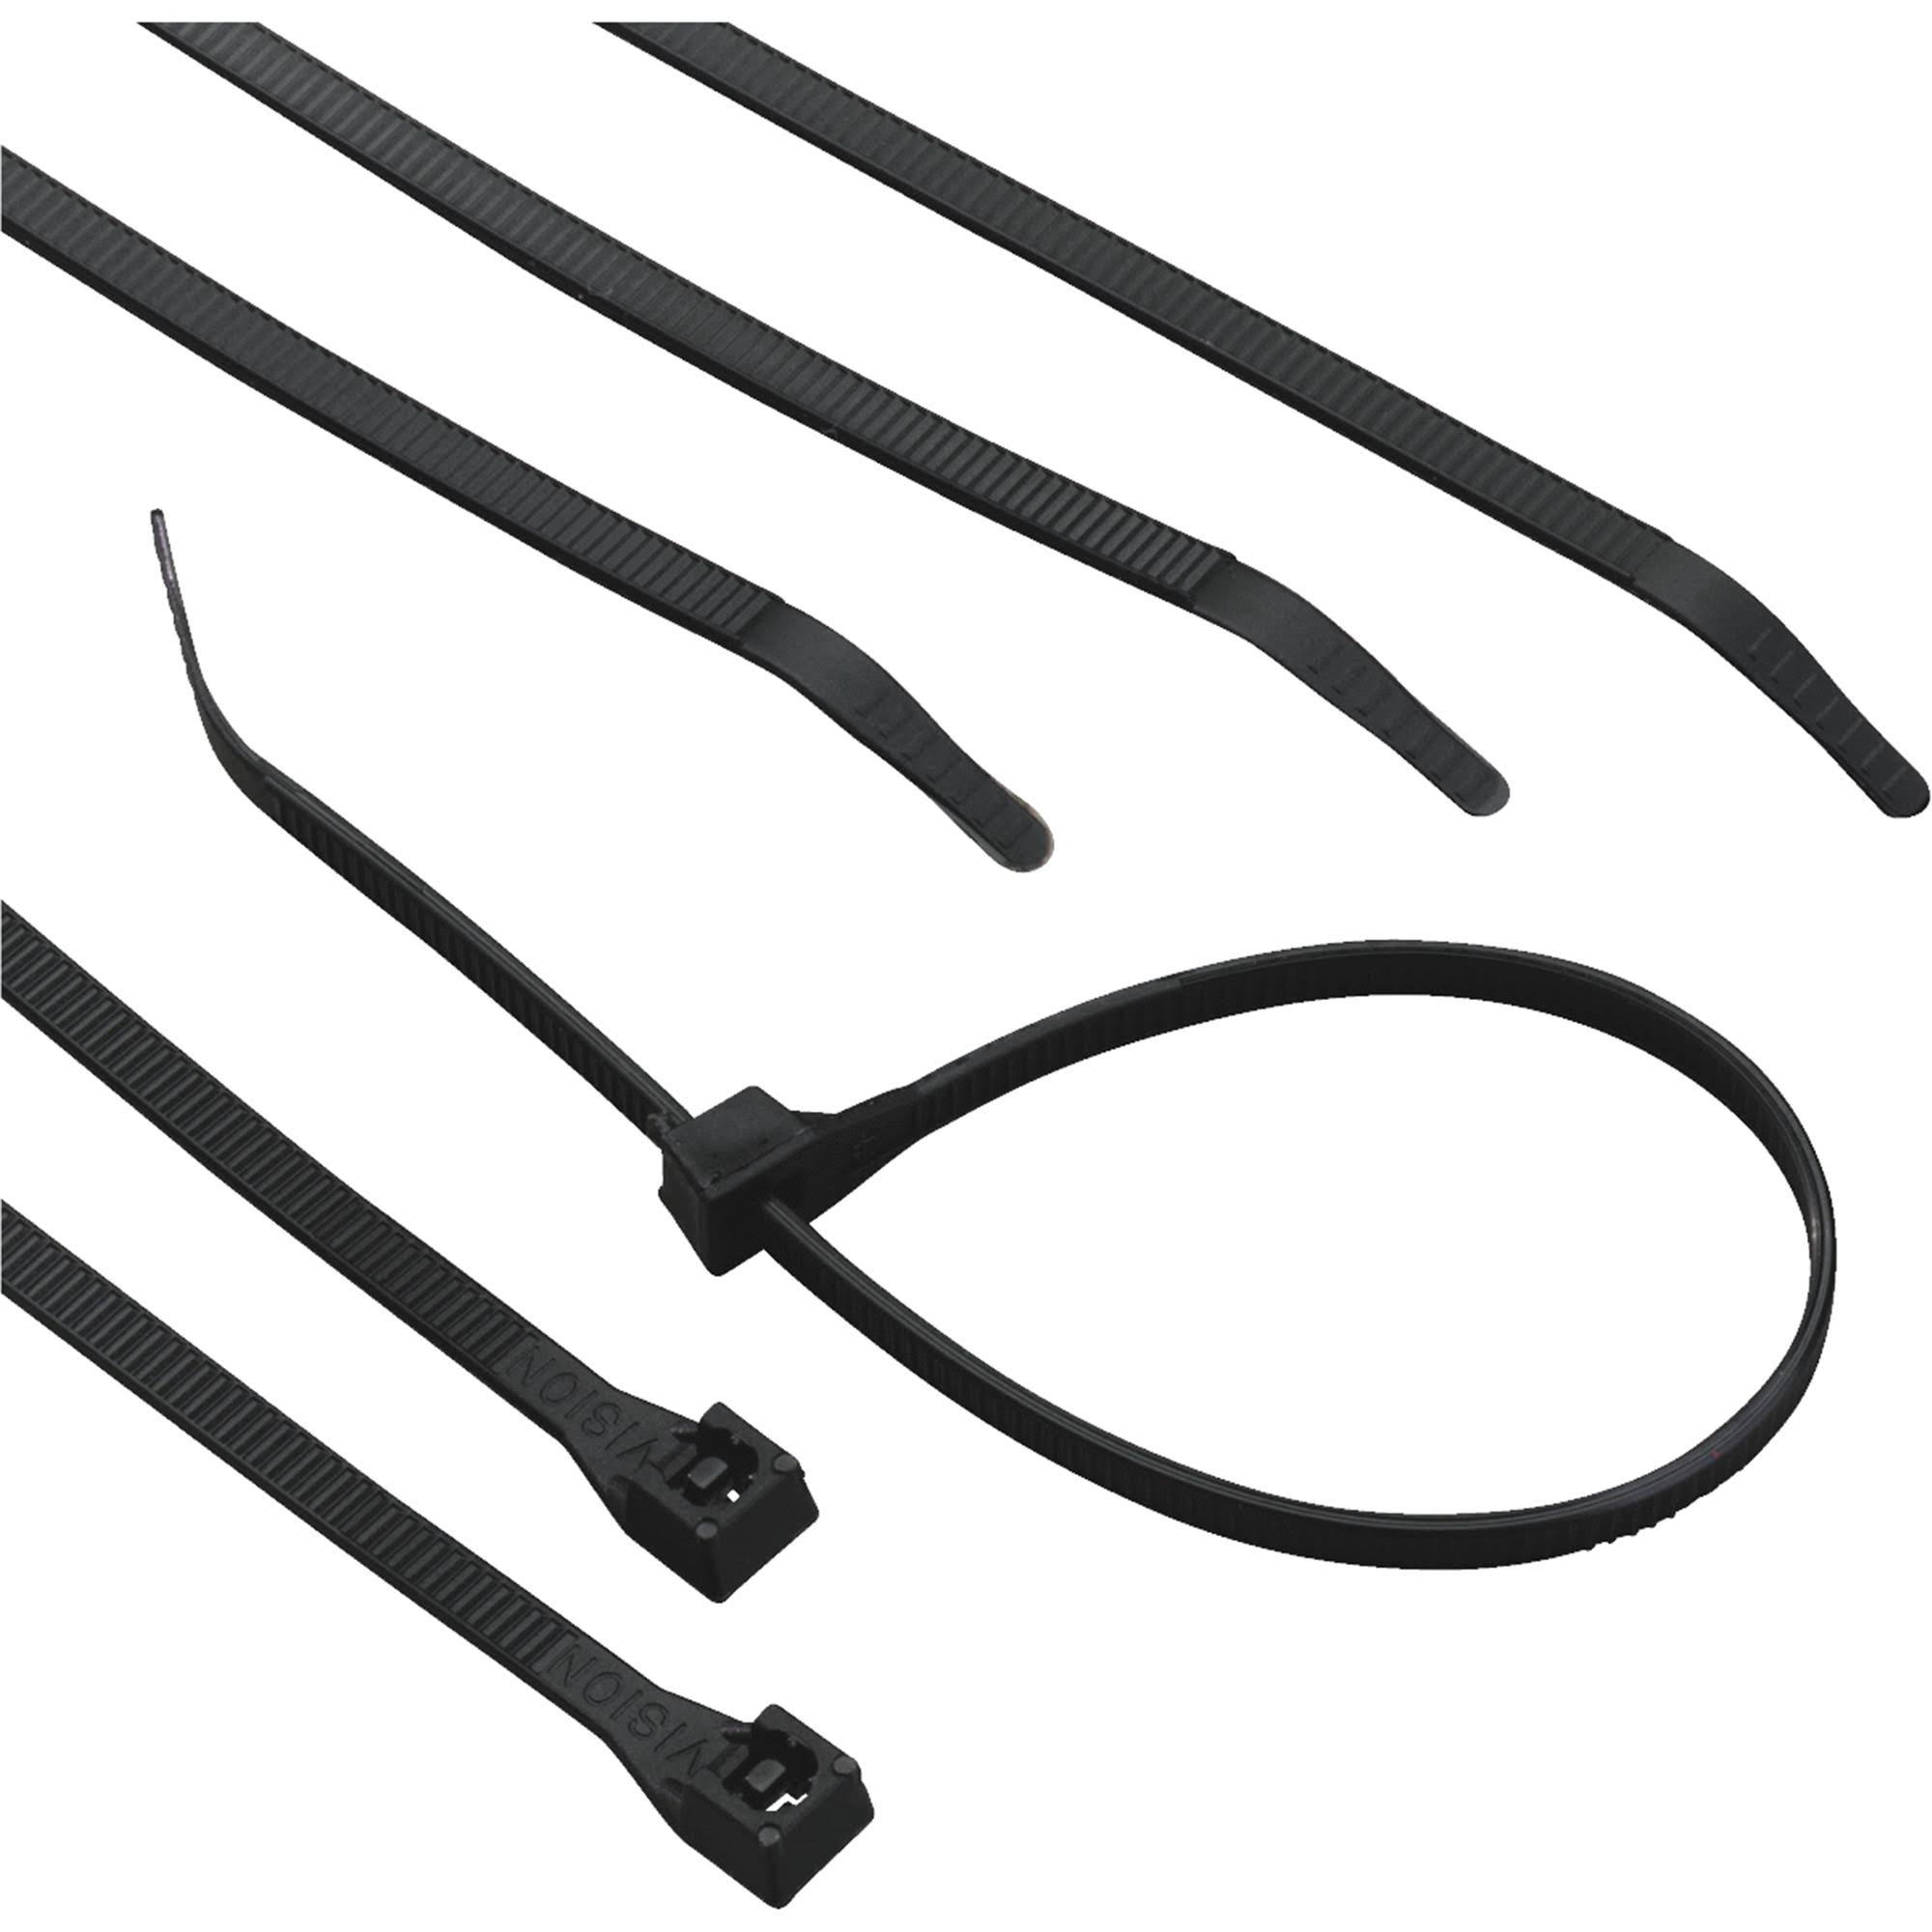 Gardner Bender 45-312uvb Double Lock Standard Cable Tie - 8 Pack, 12", Black